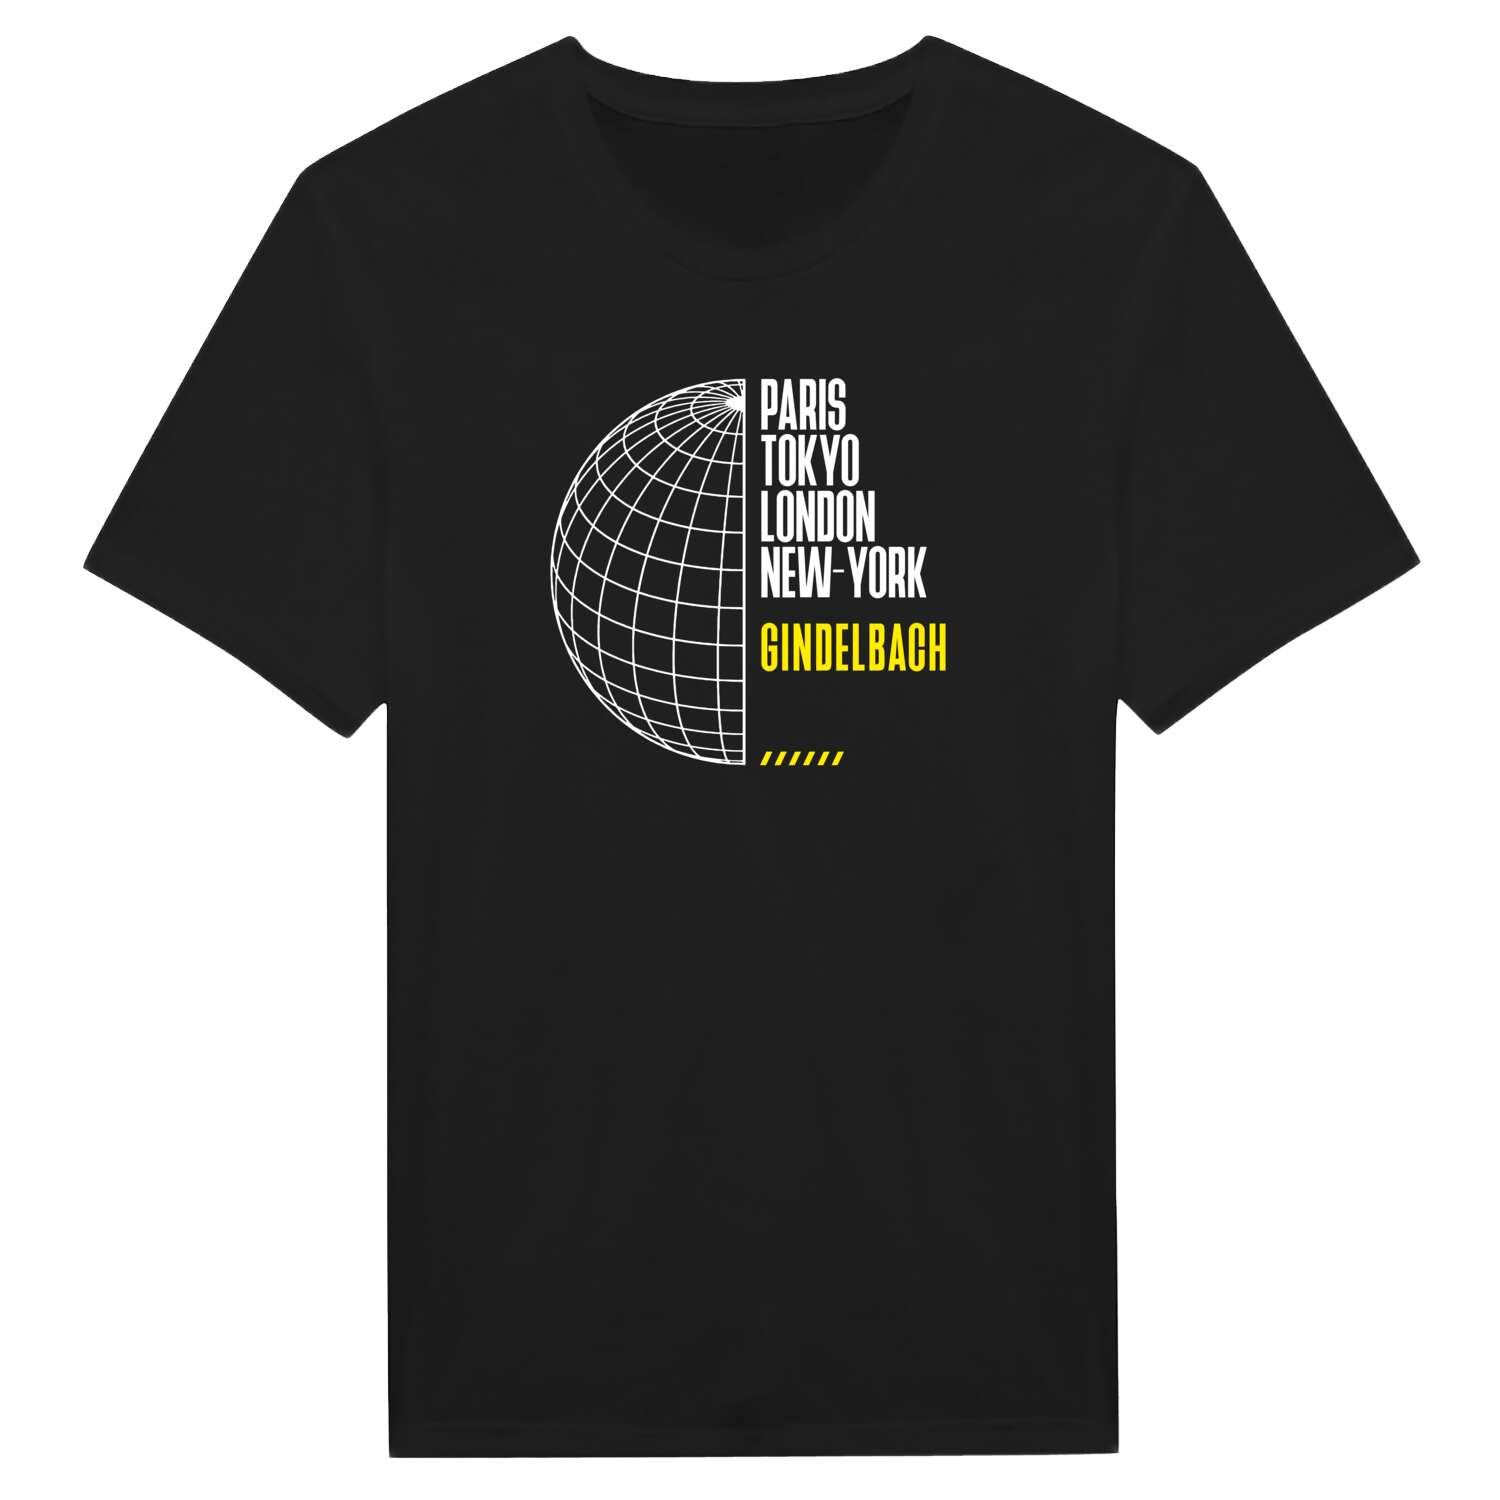 Gindelbach T-Shirt »Paris Tokyo London«